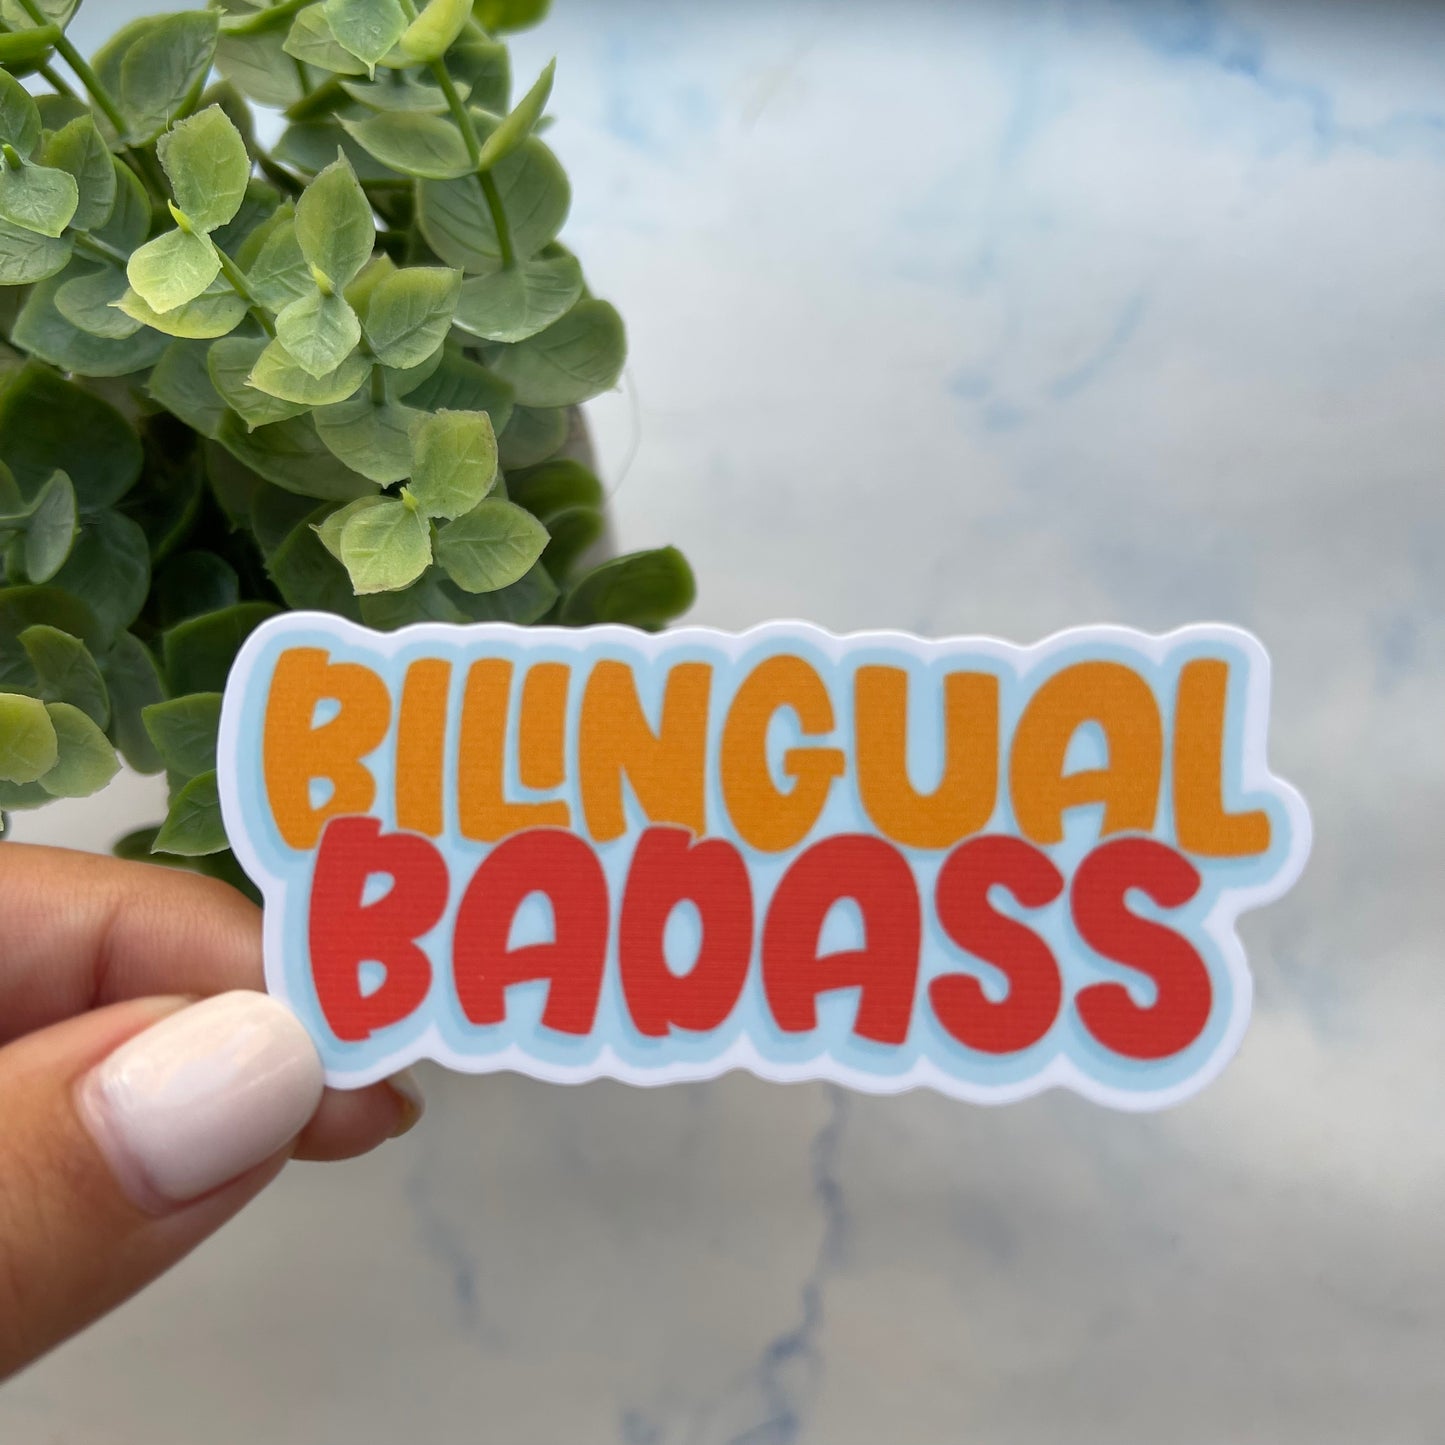 Bilingual Badass Sticker